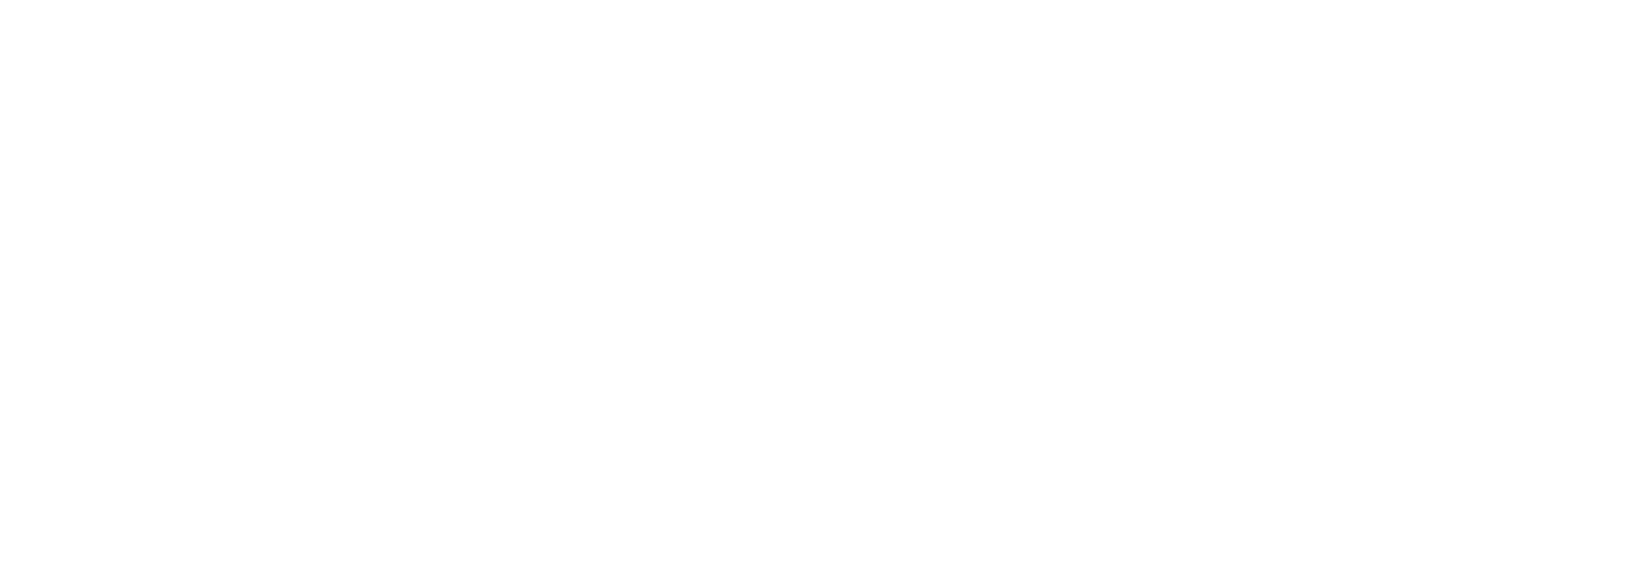 Northeast US Map